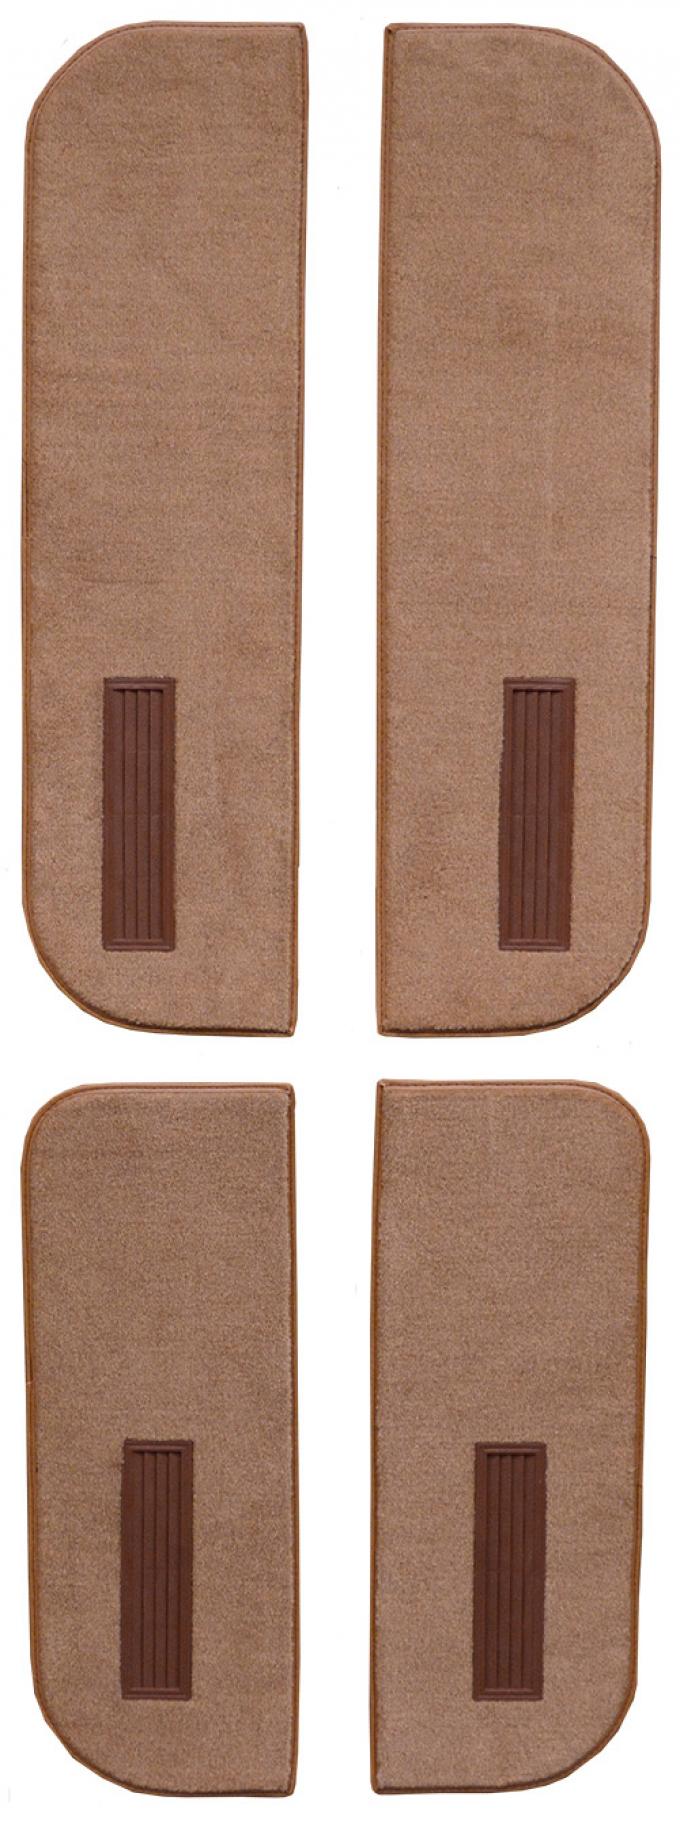 ACC 1973 GMC C15/C1500 Suburban Door Panel Inserts on Cardboard w/Vents 4pc Loop Carpet